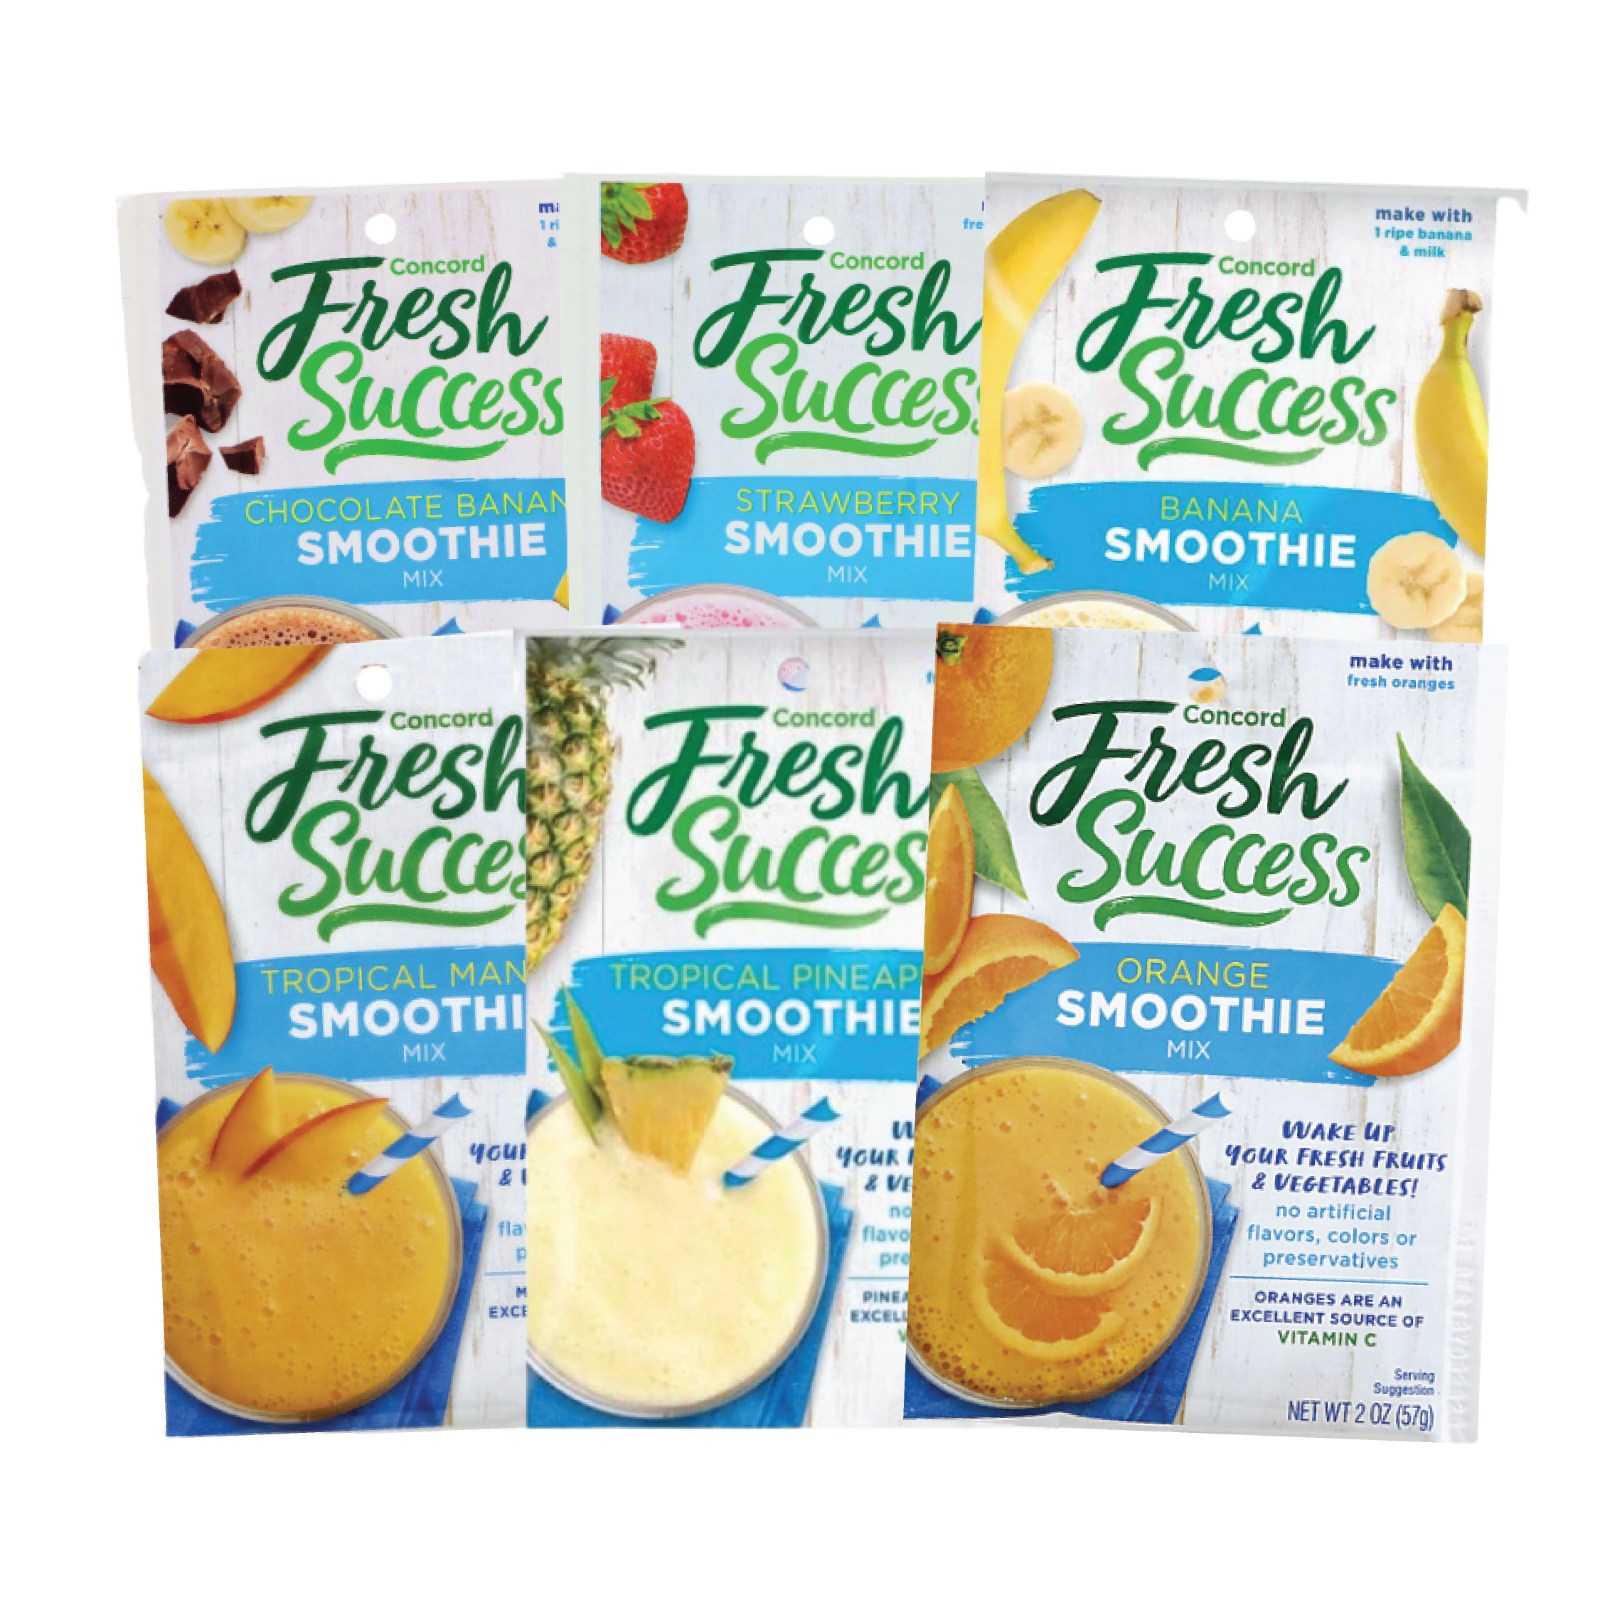 Concord Fresh Success Smoothie Mix | No Artificial Flavors | Mix & Match - $24.63 - $35.69